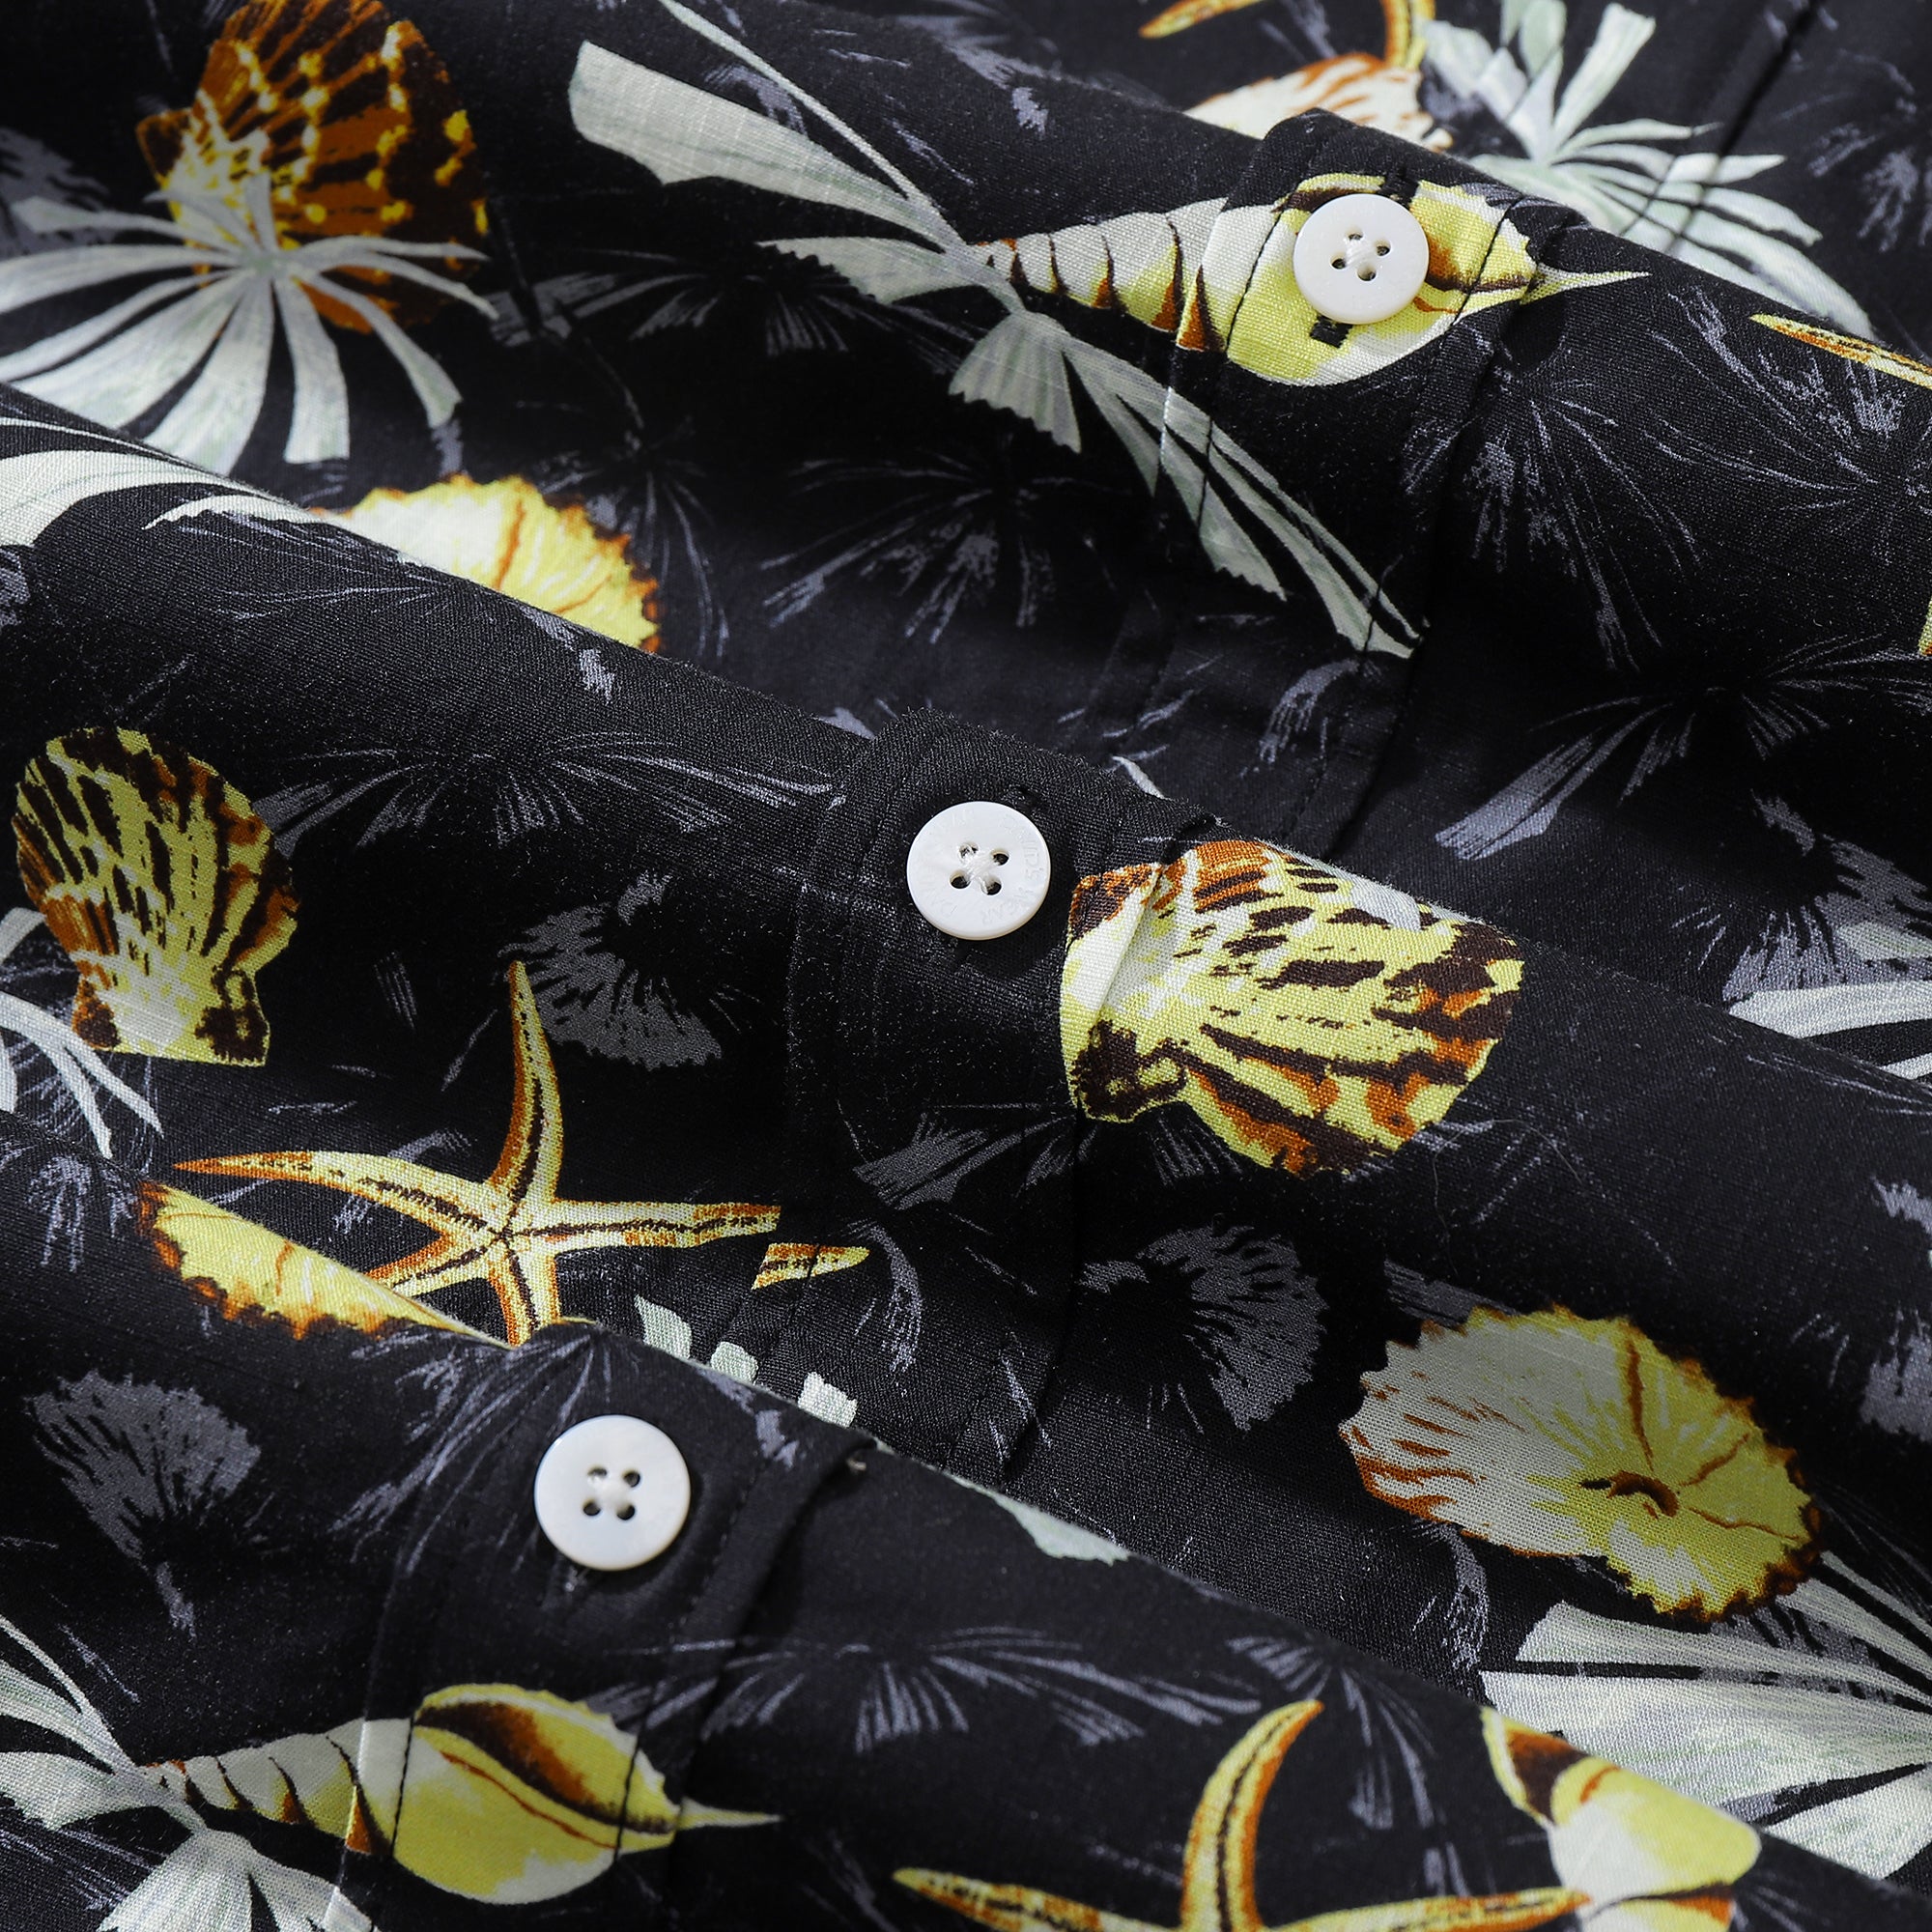 Men's Hawaiian Shirt Vintage Tropical Conch Cotton Button-down Long Sleeve Aloha Shirt